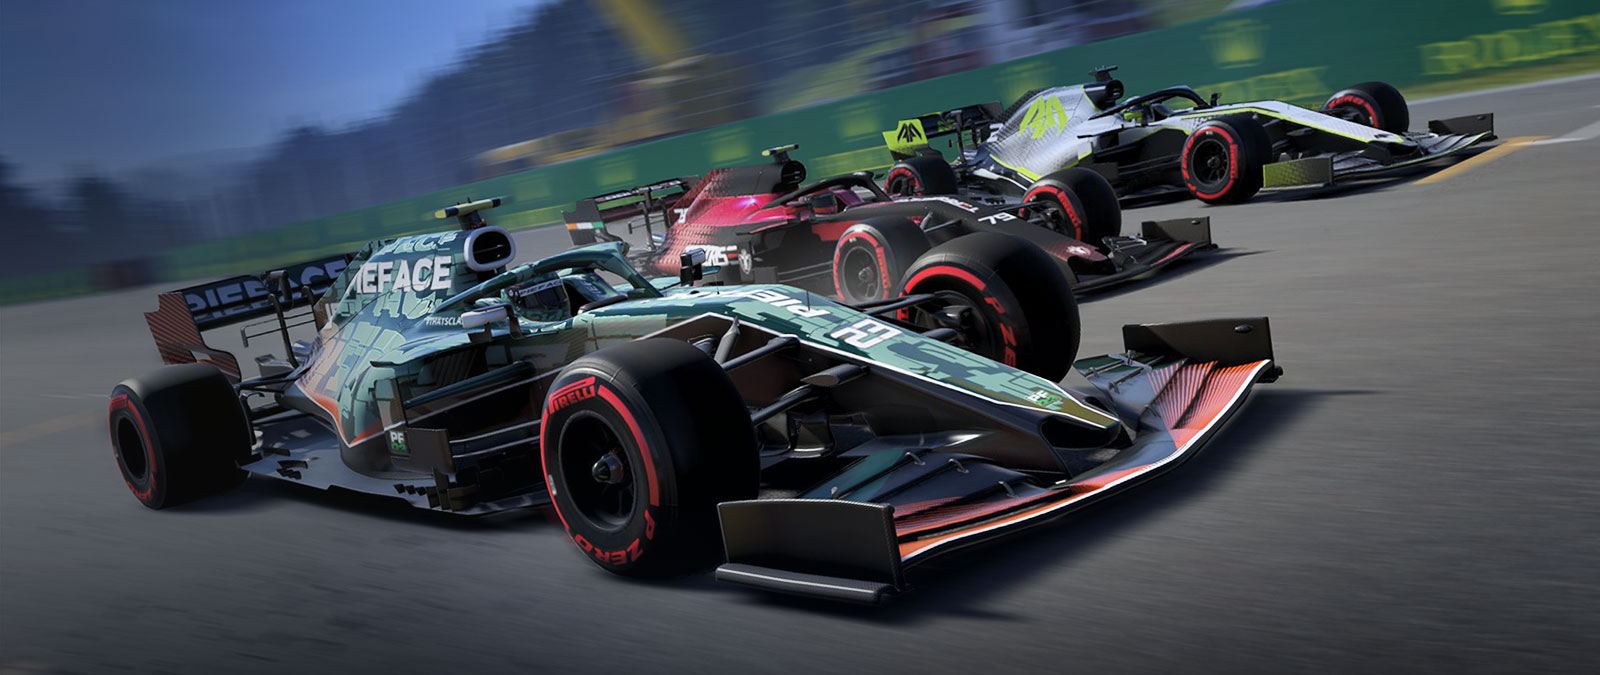 Tres autos de F1 recorren la pista en paralelo.